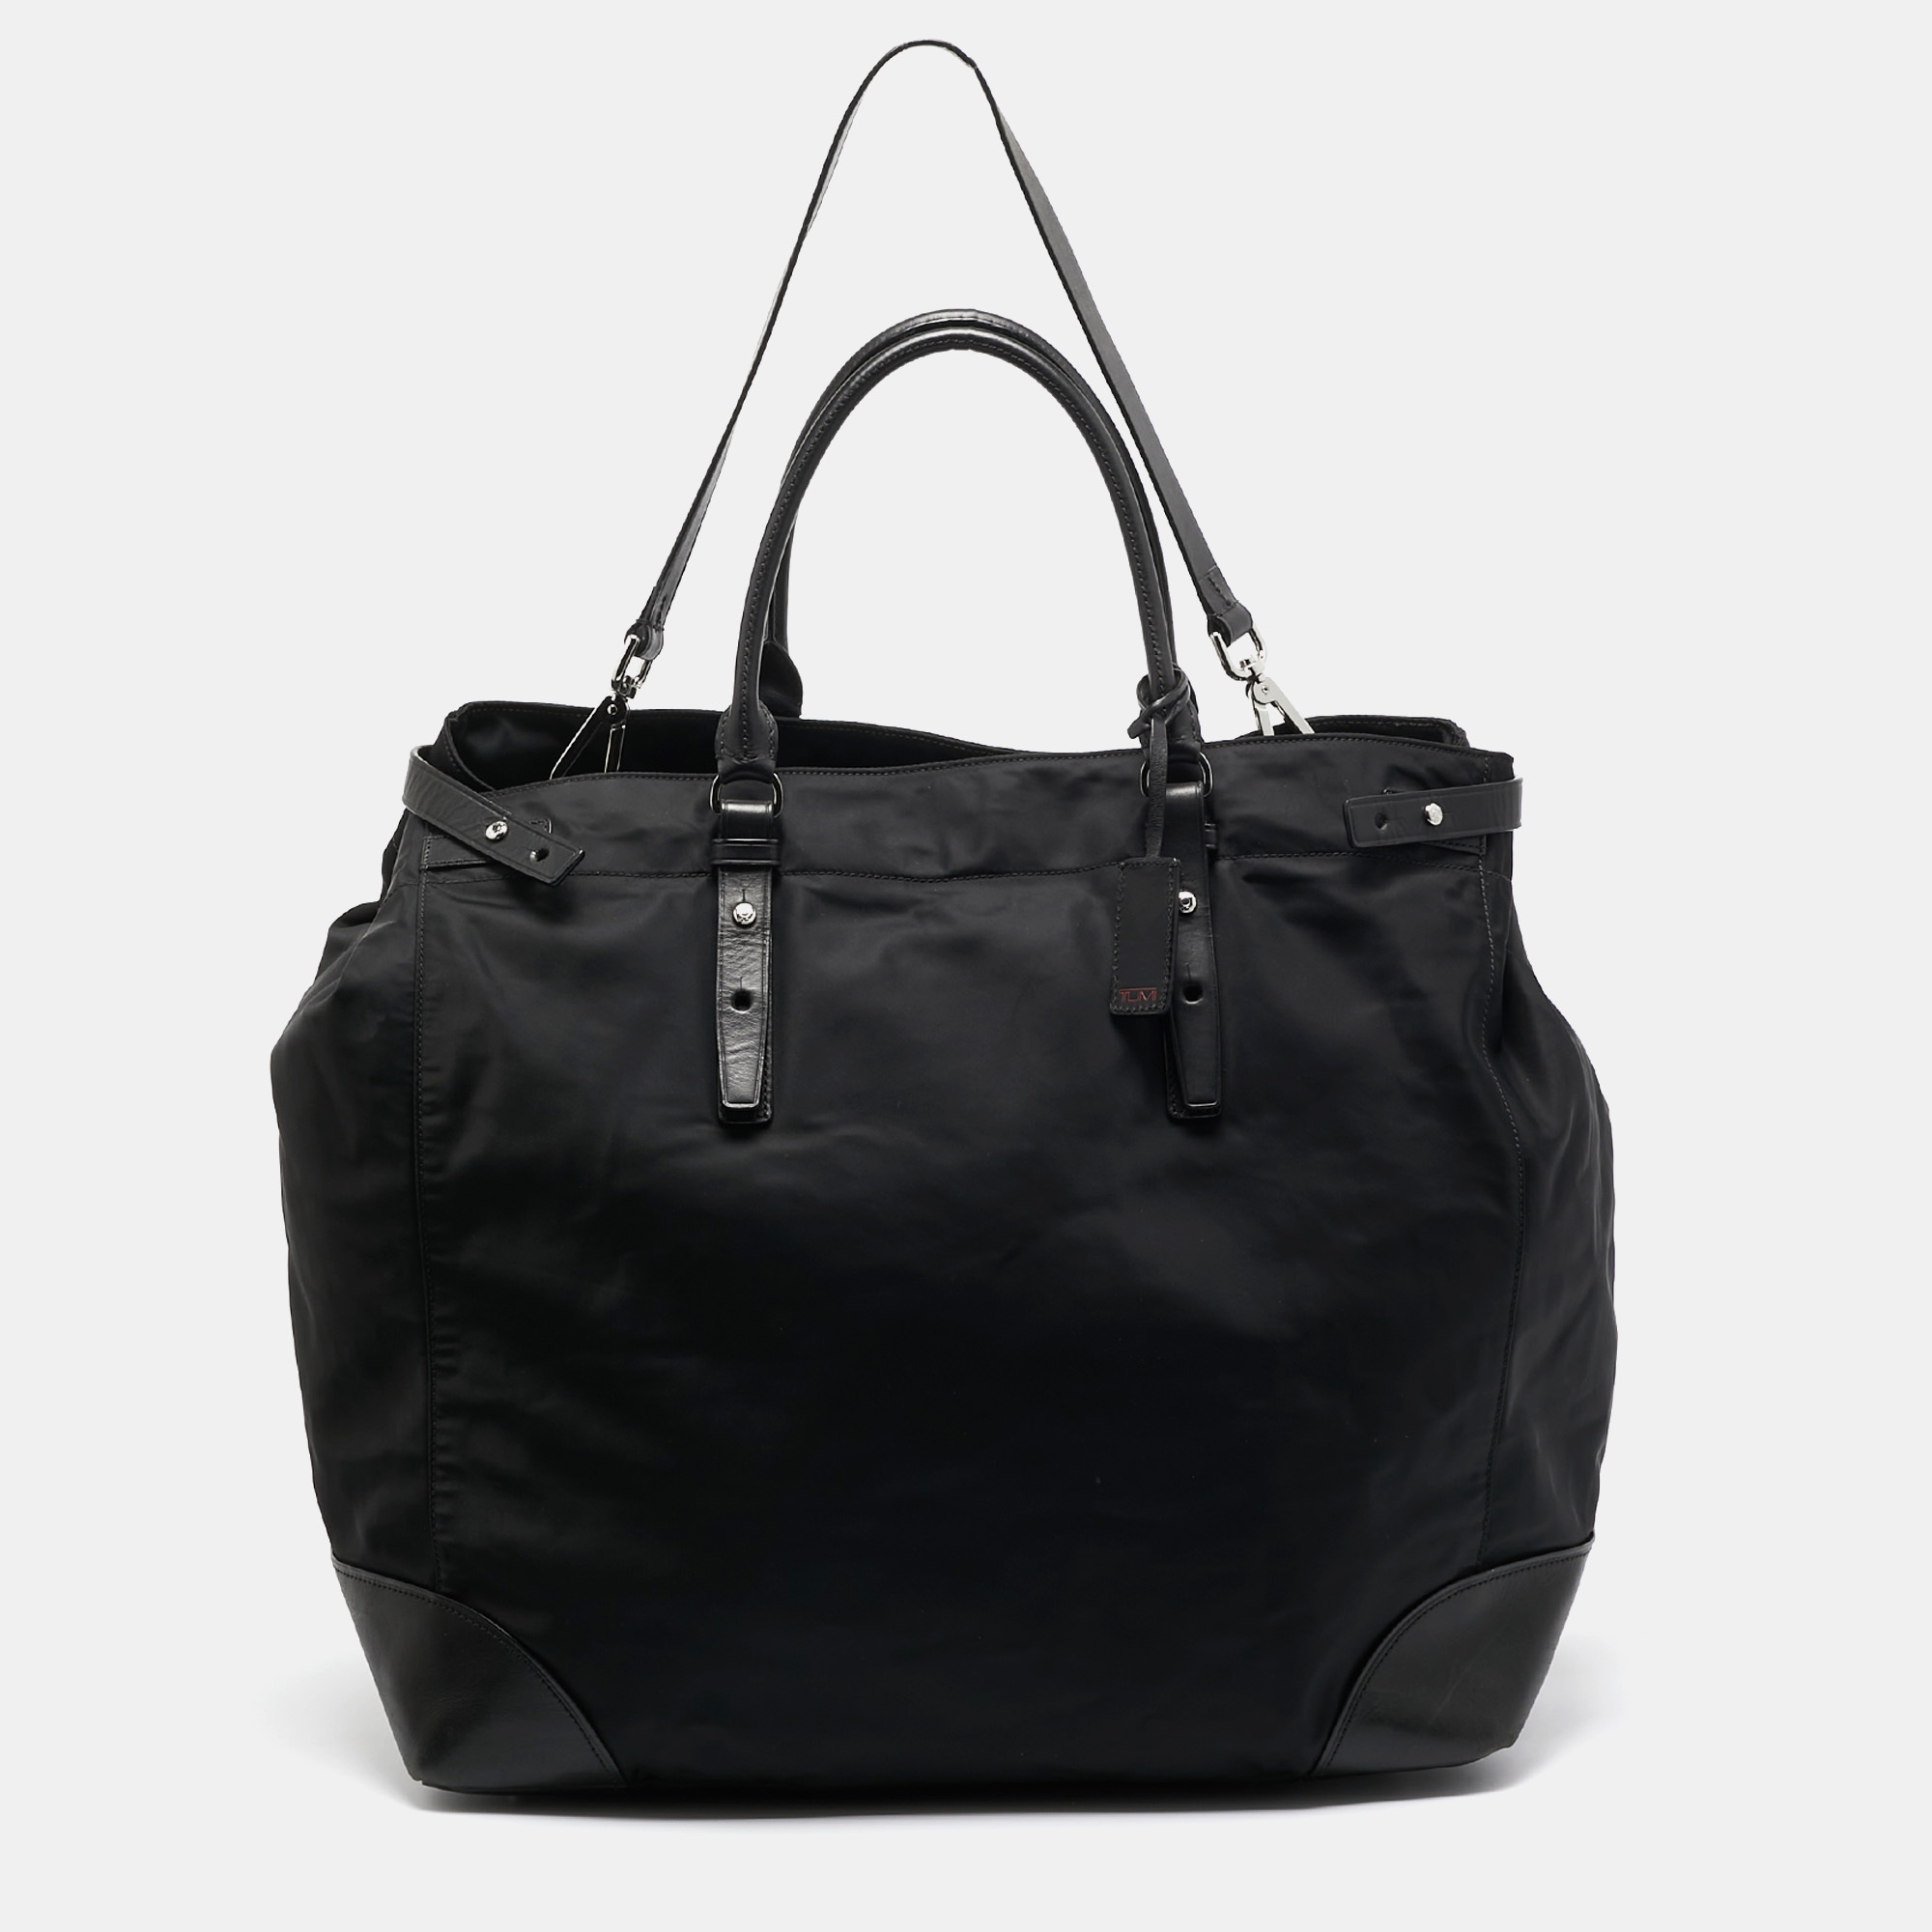 

TUMI Black Nylon Weekender Bag